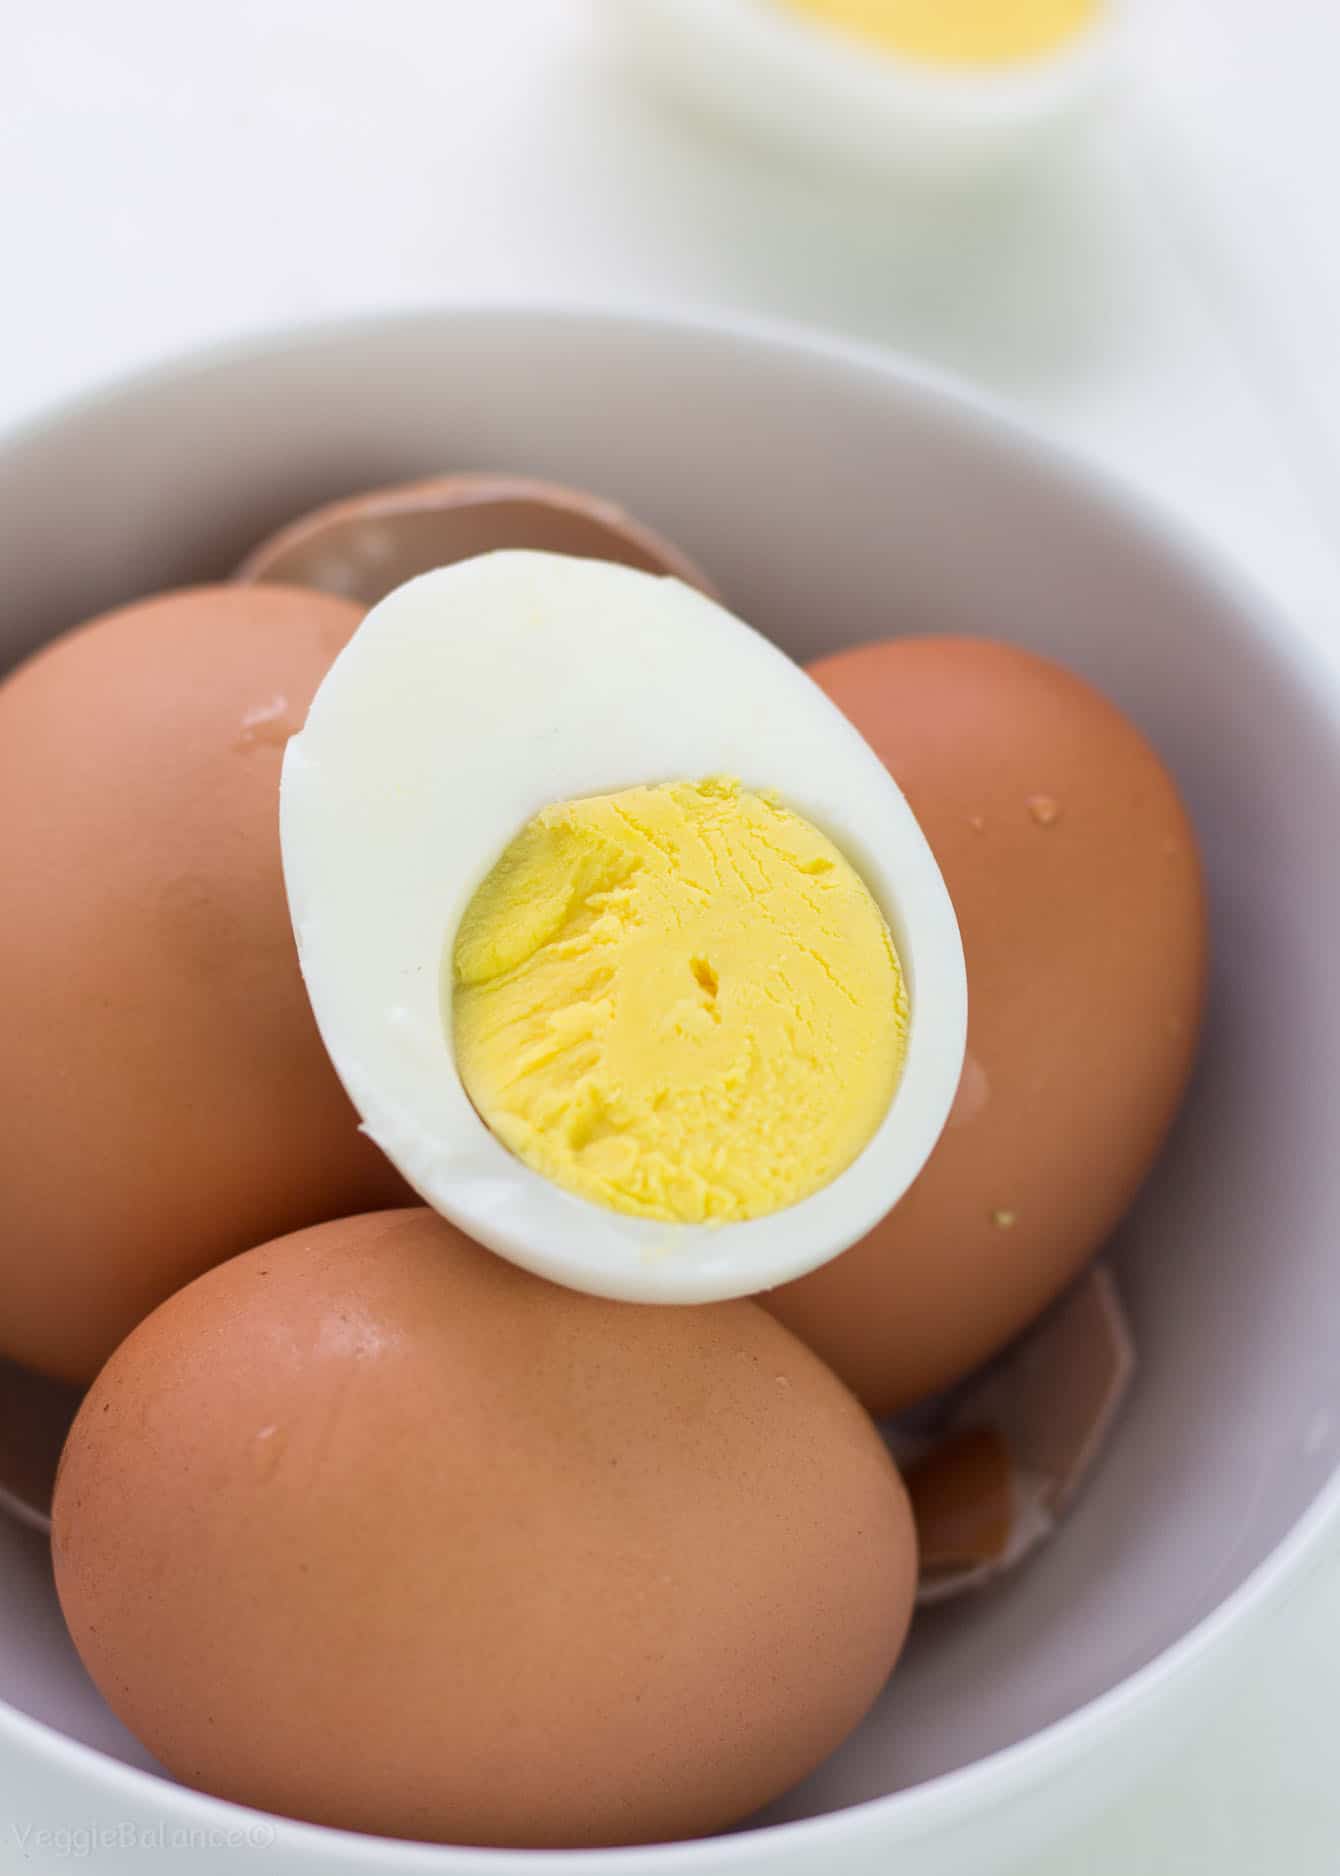 https://www.veggiebalance.com/wp-content/uploads/2017/03/How-to-Make-Perfect-Hard-Boiled-Eggs-3.jpg